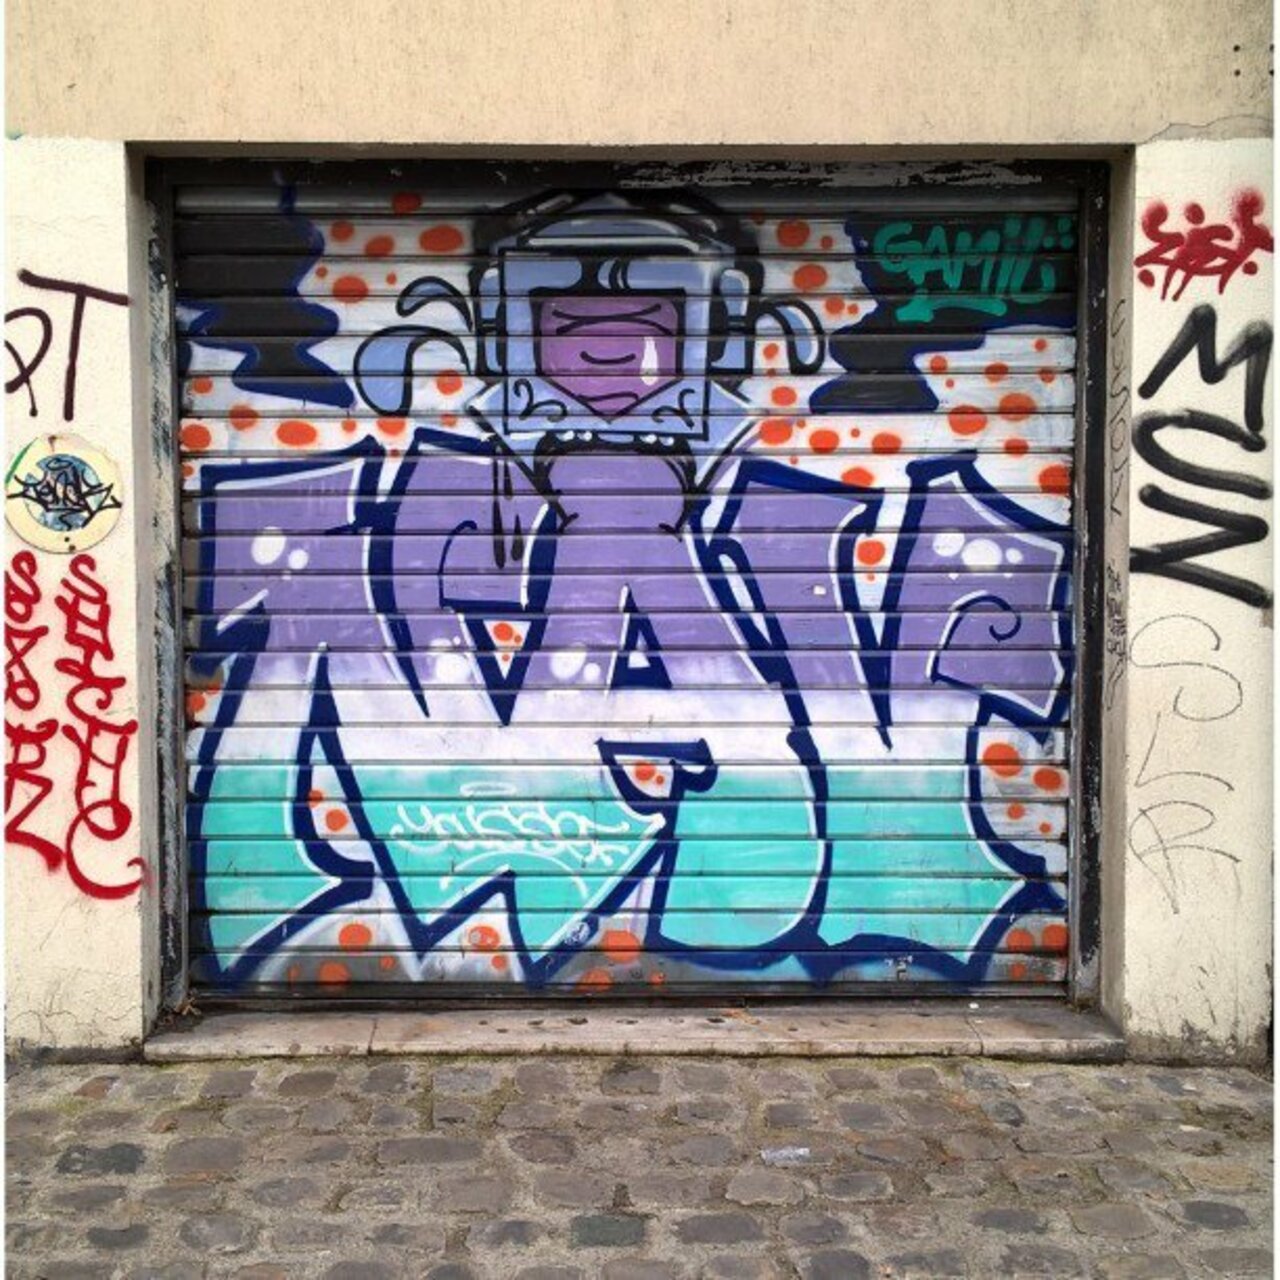 NAV
#NAVcrew #streetart #graffiti #graff #art #fatcap #bombing #sprayart #spraycanart #wallart #handstyle #letterin… https://t.co/UjjveIXxWB